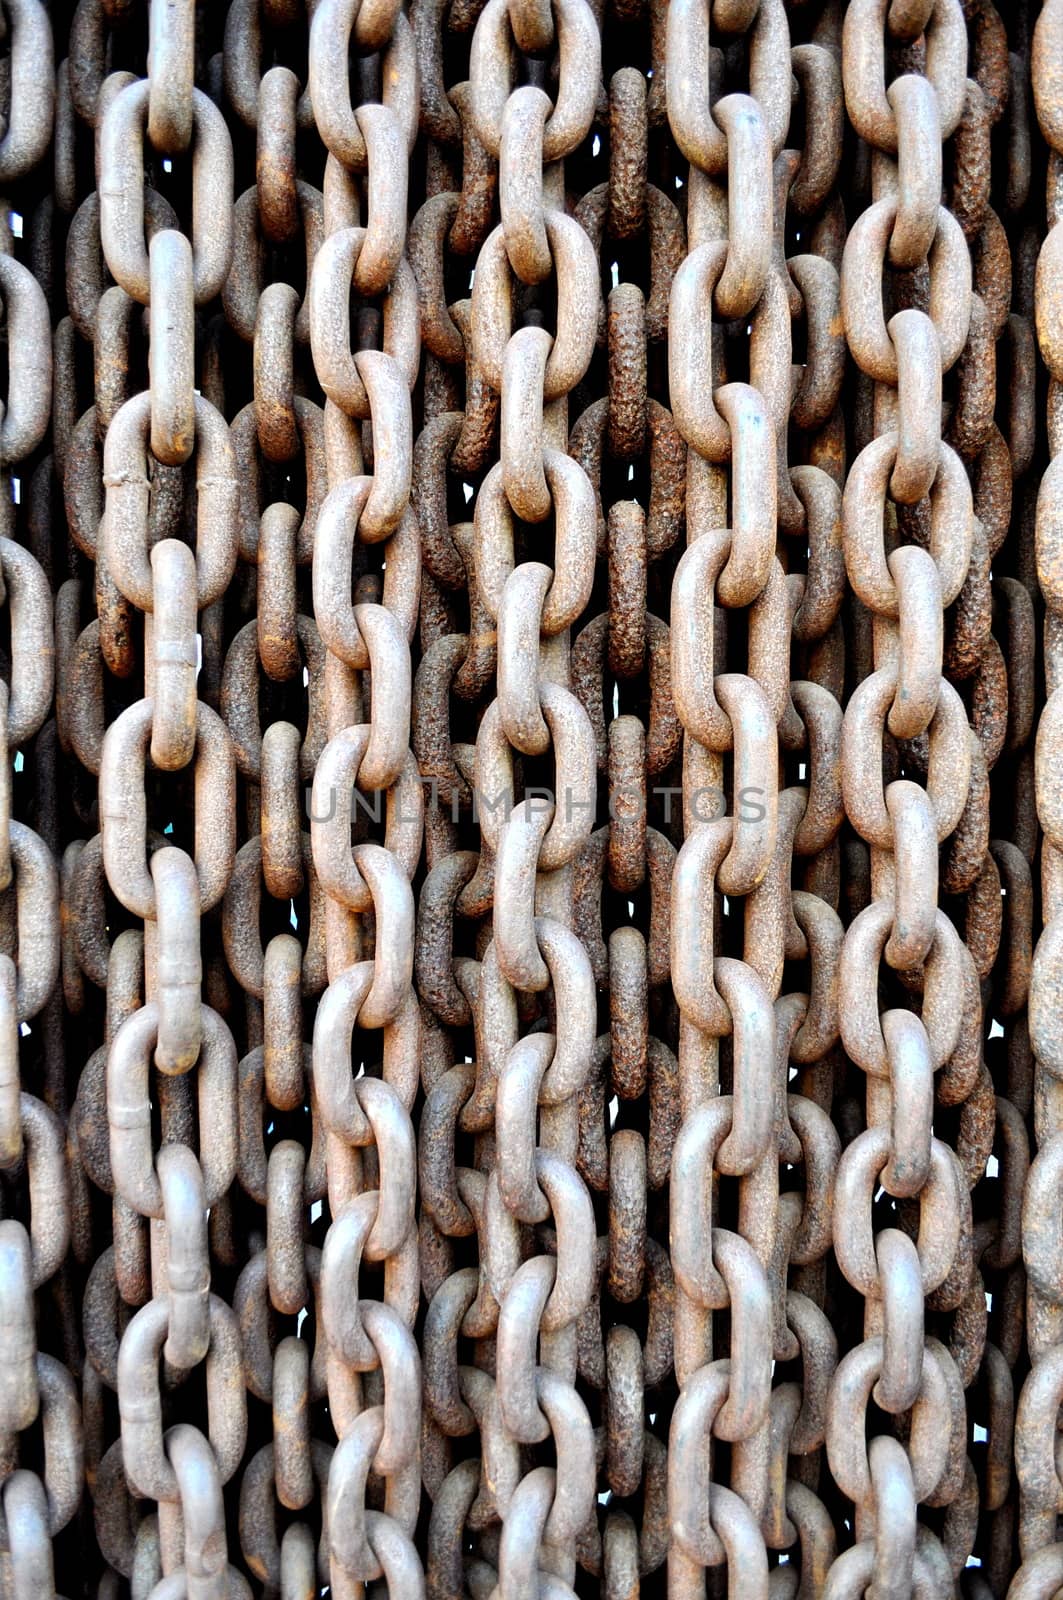 Iron chains